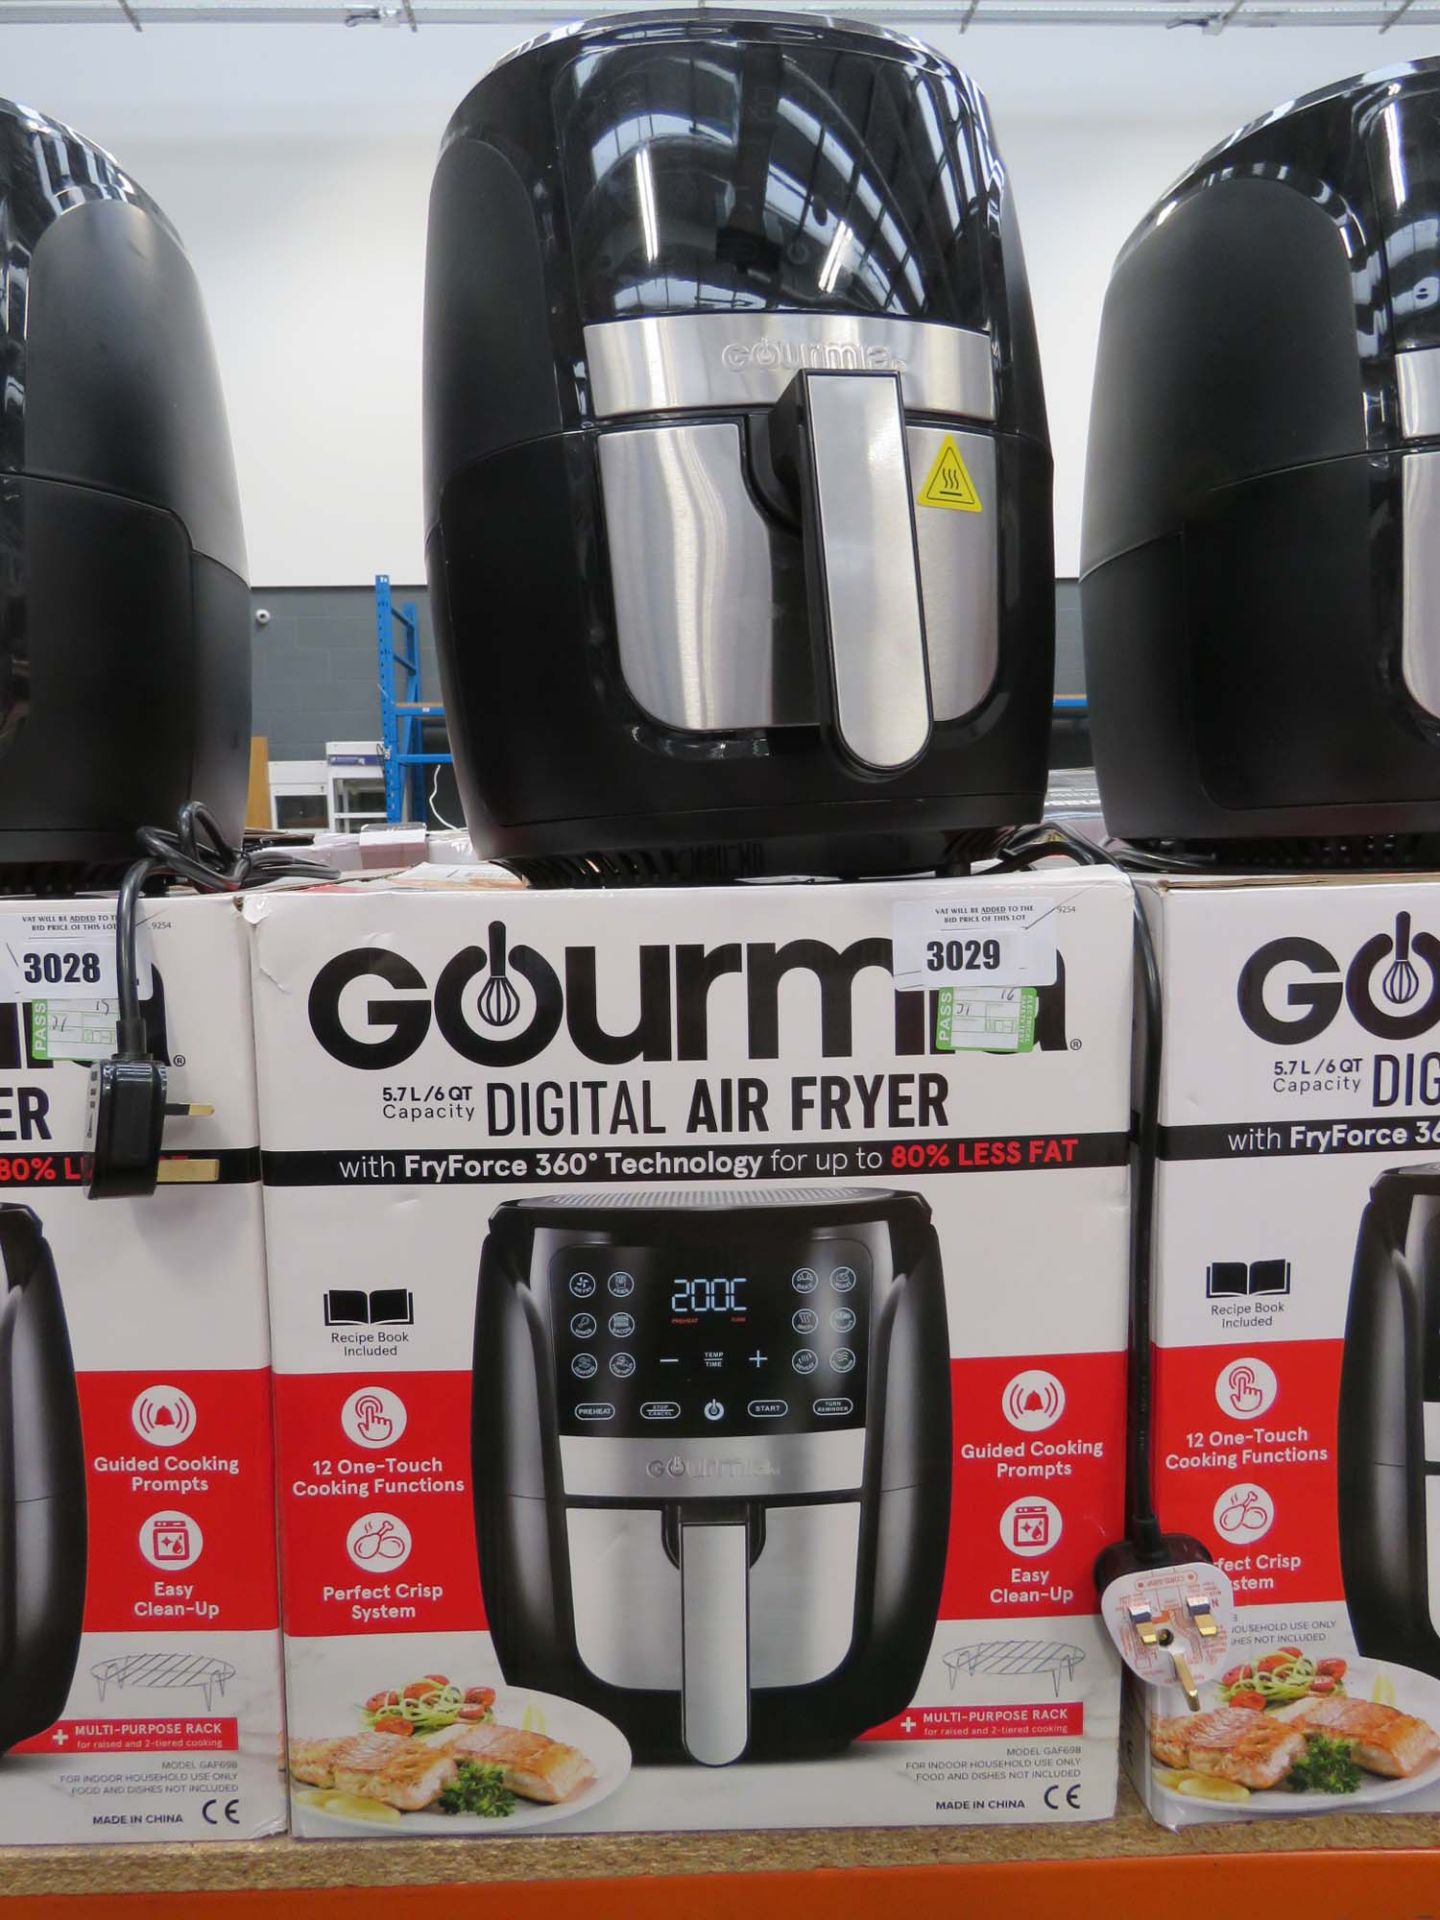 3130 Gourmia digital air fryer